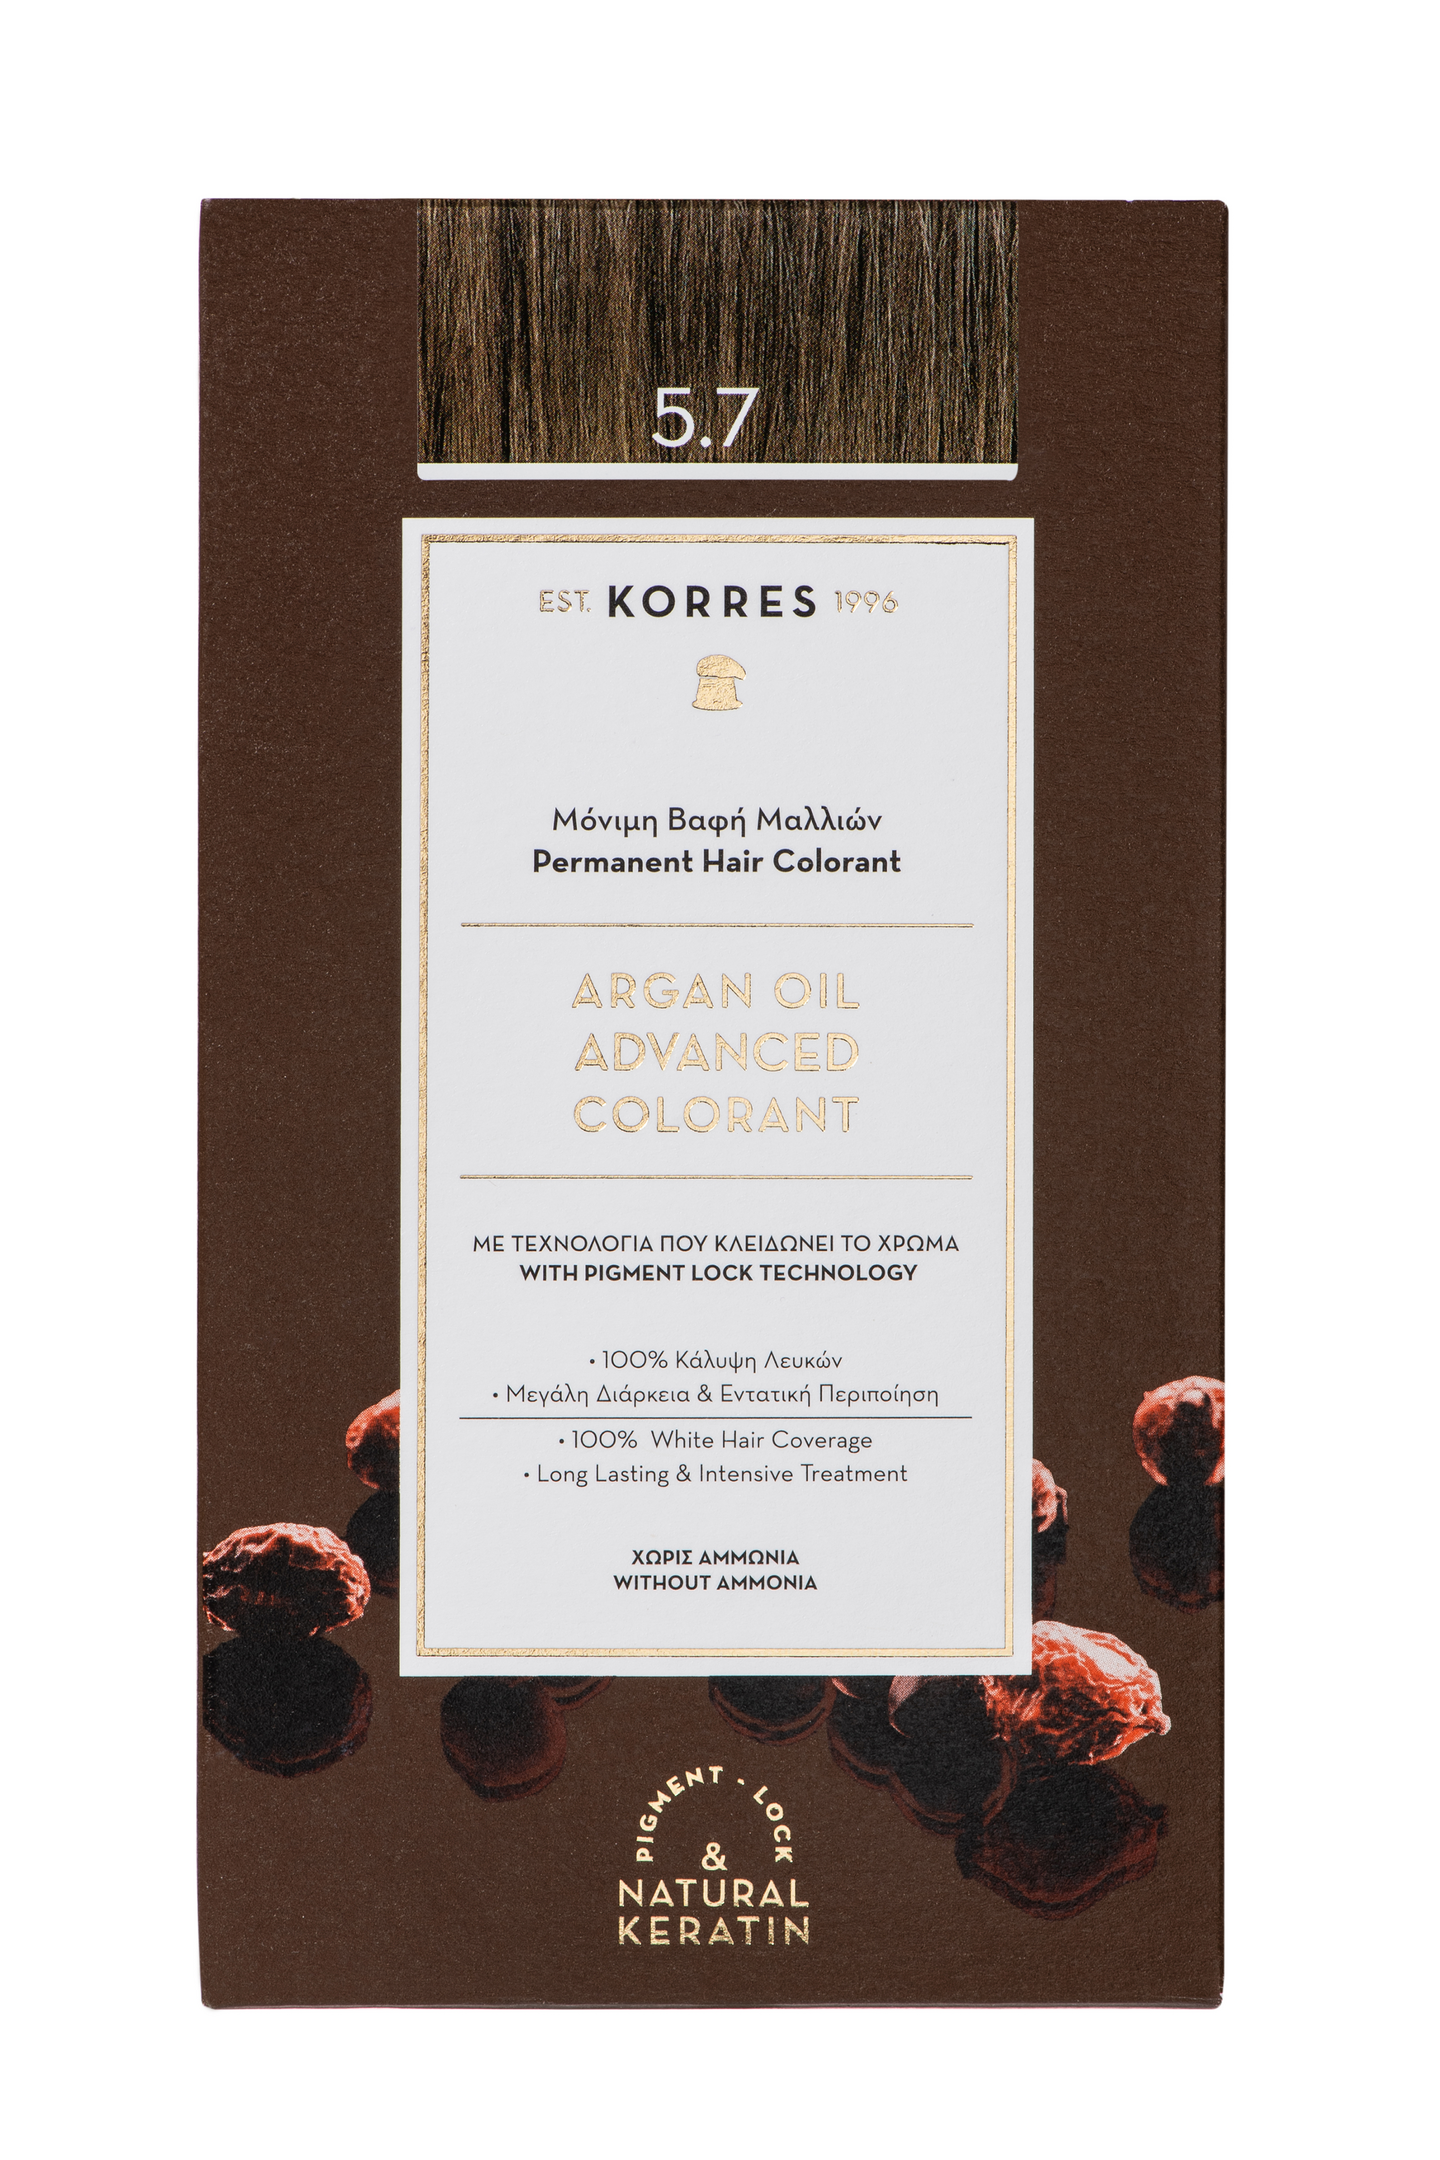 Korres hiusväri 5.7 Chocolate Argan Oil Advance Colorant 50ml+75ml+